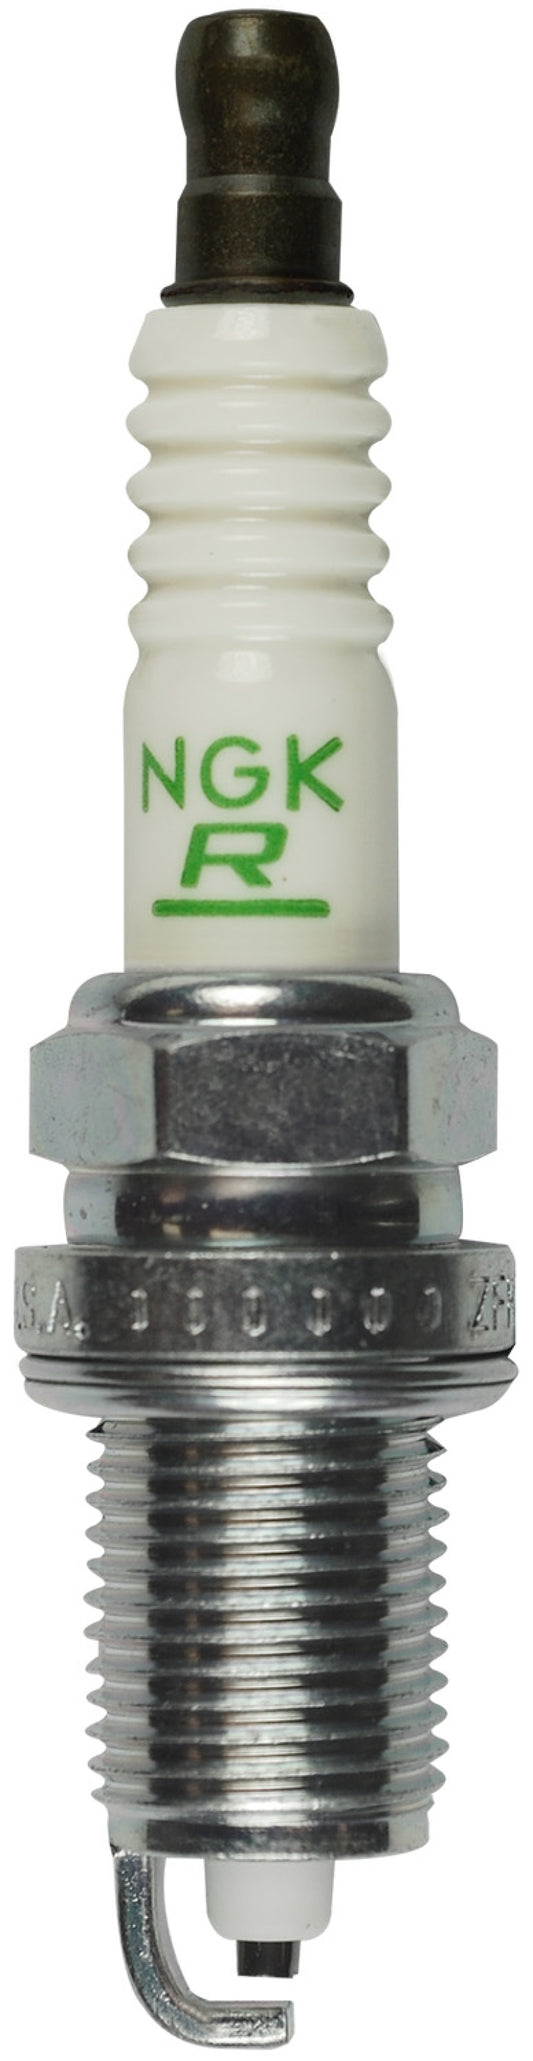 NGK V-Power Spark Plug Box of 4 (ZFR5F)